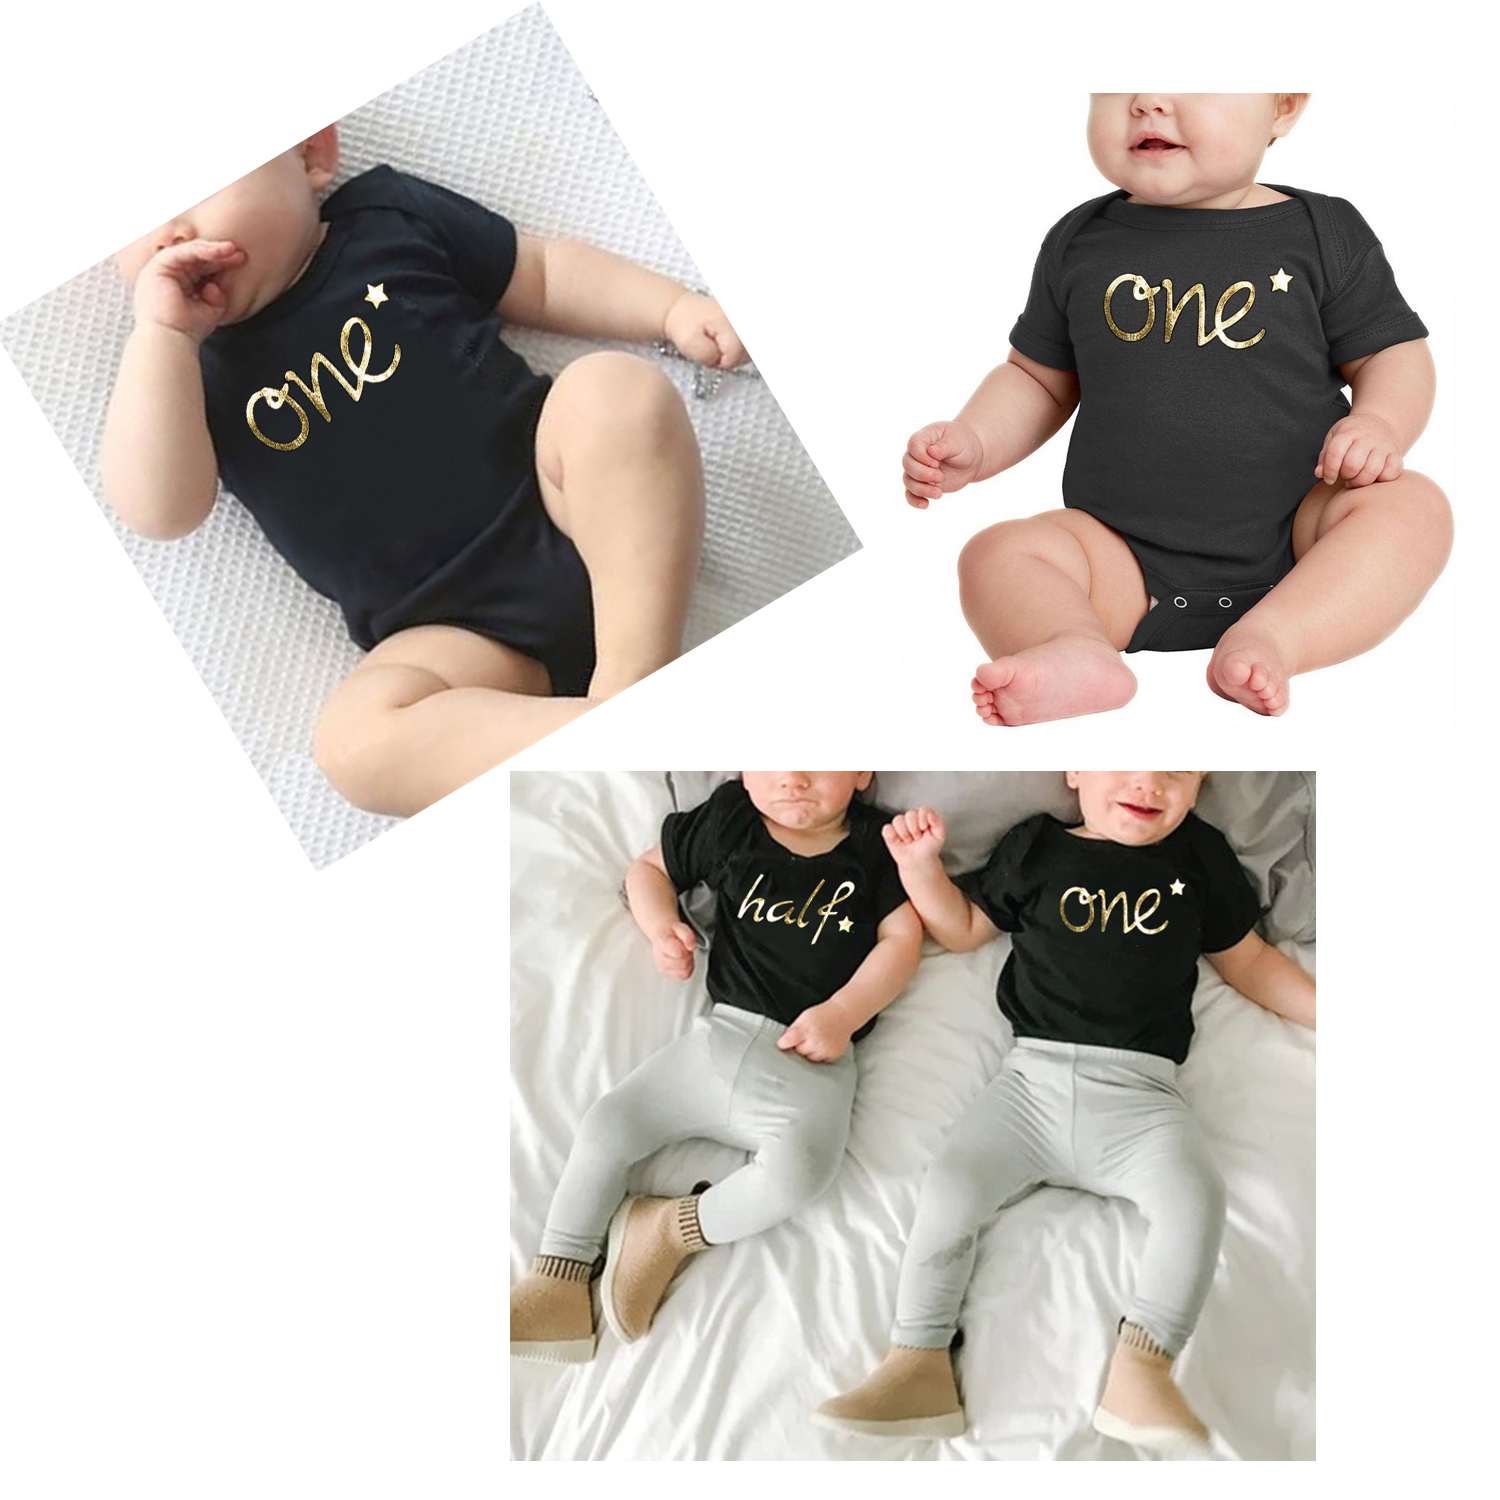 BKD Unisex Infant Baby Boy Girl Organic Onesie Bodysuit for Half or First Birthday Gift Gold Birthday Outfits